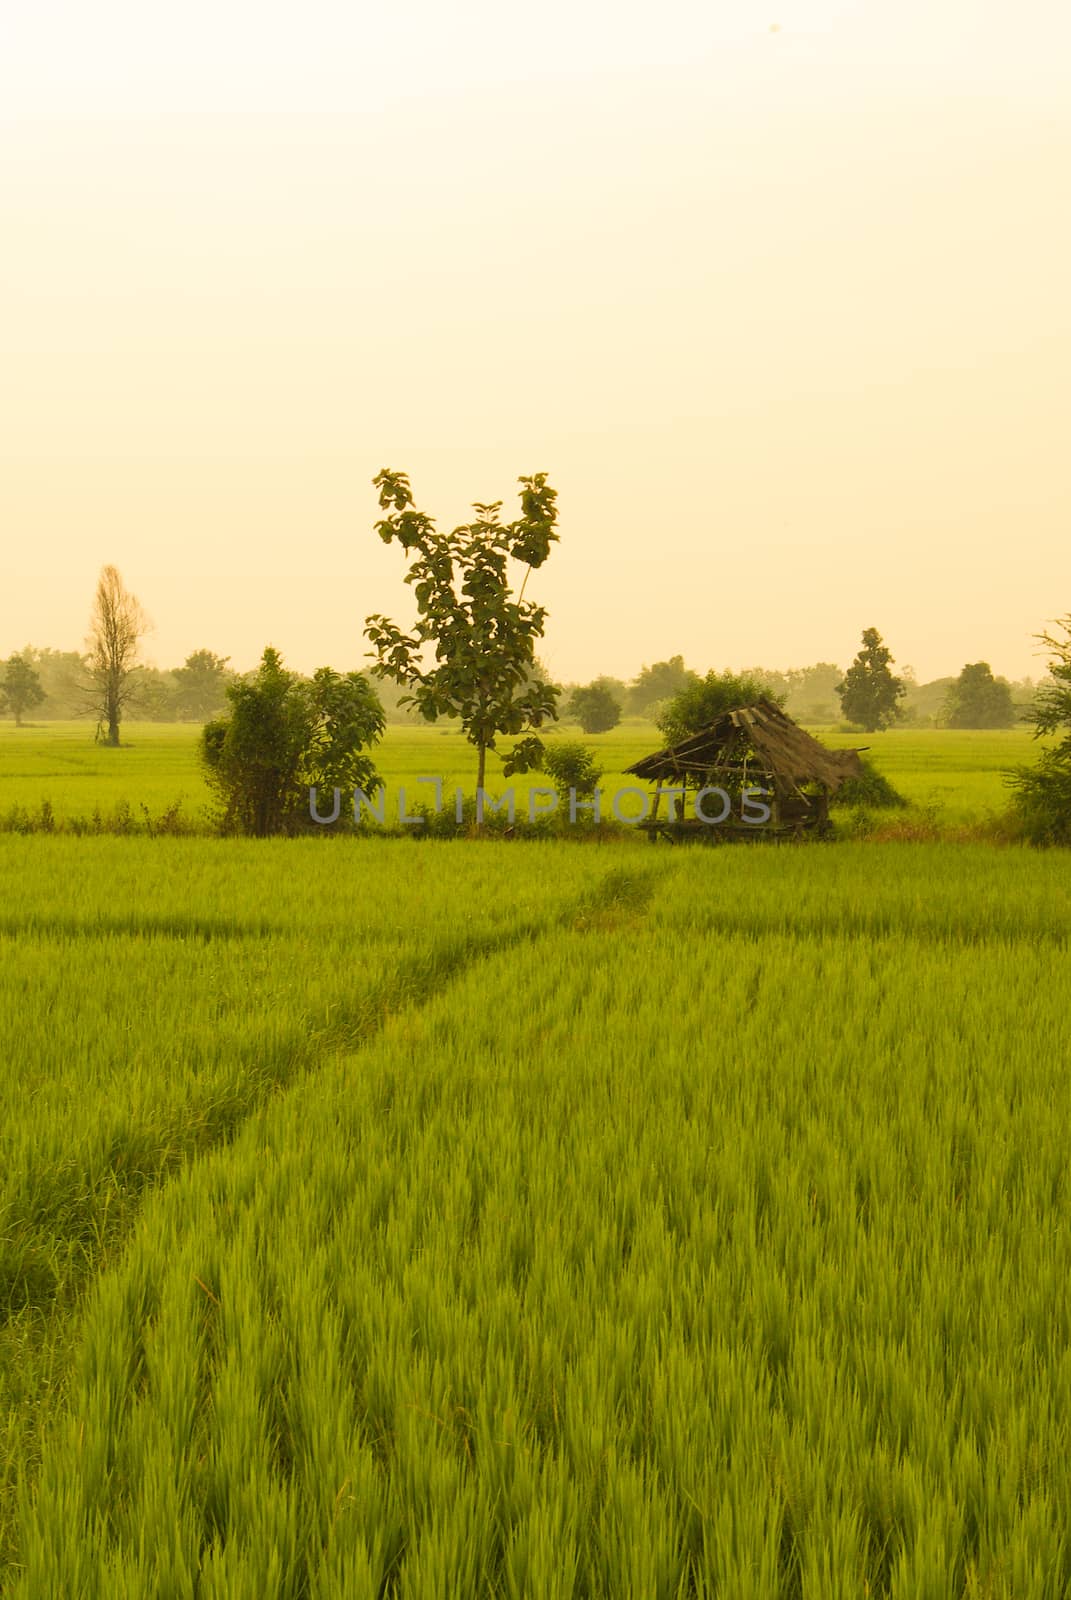 Asian rice field at sunset or sunrise